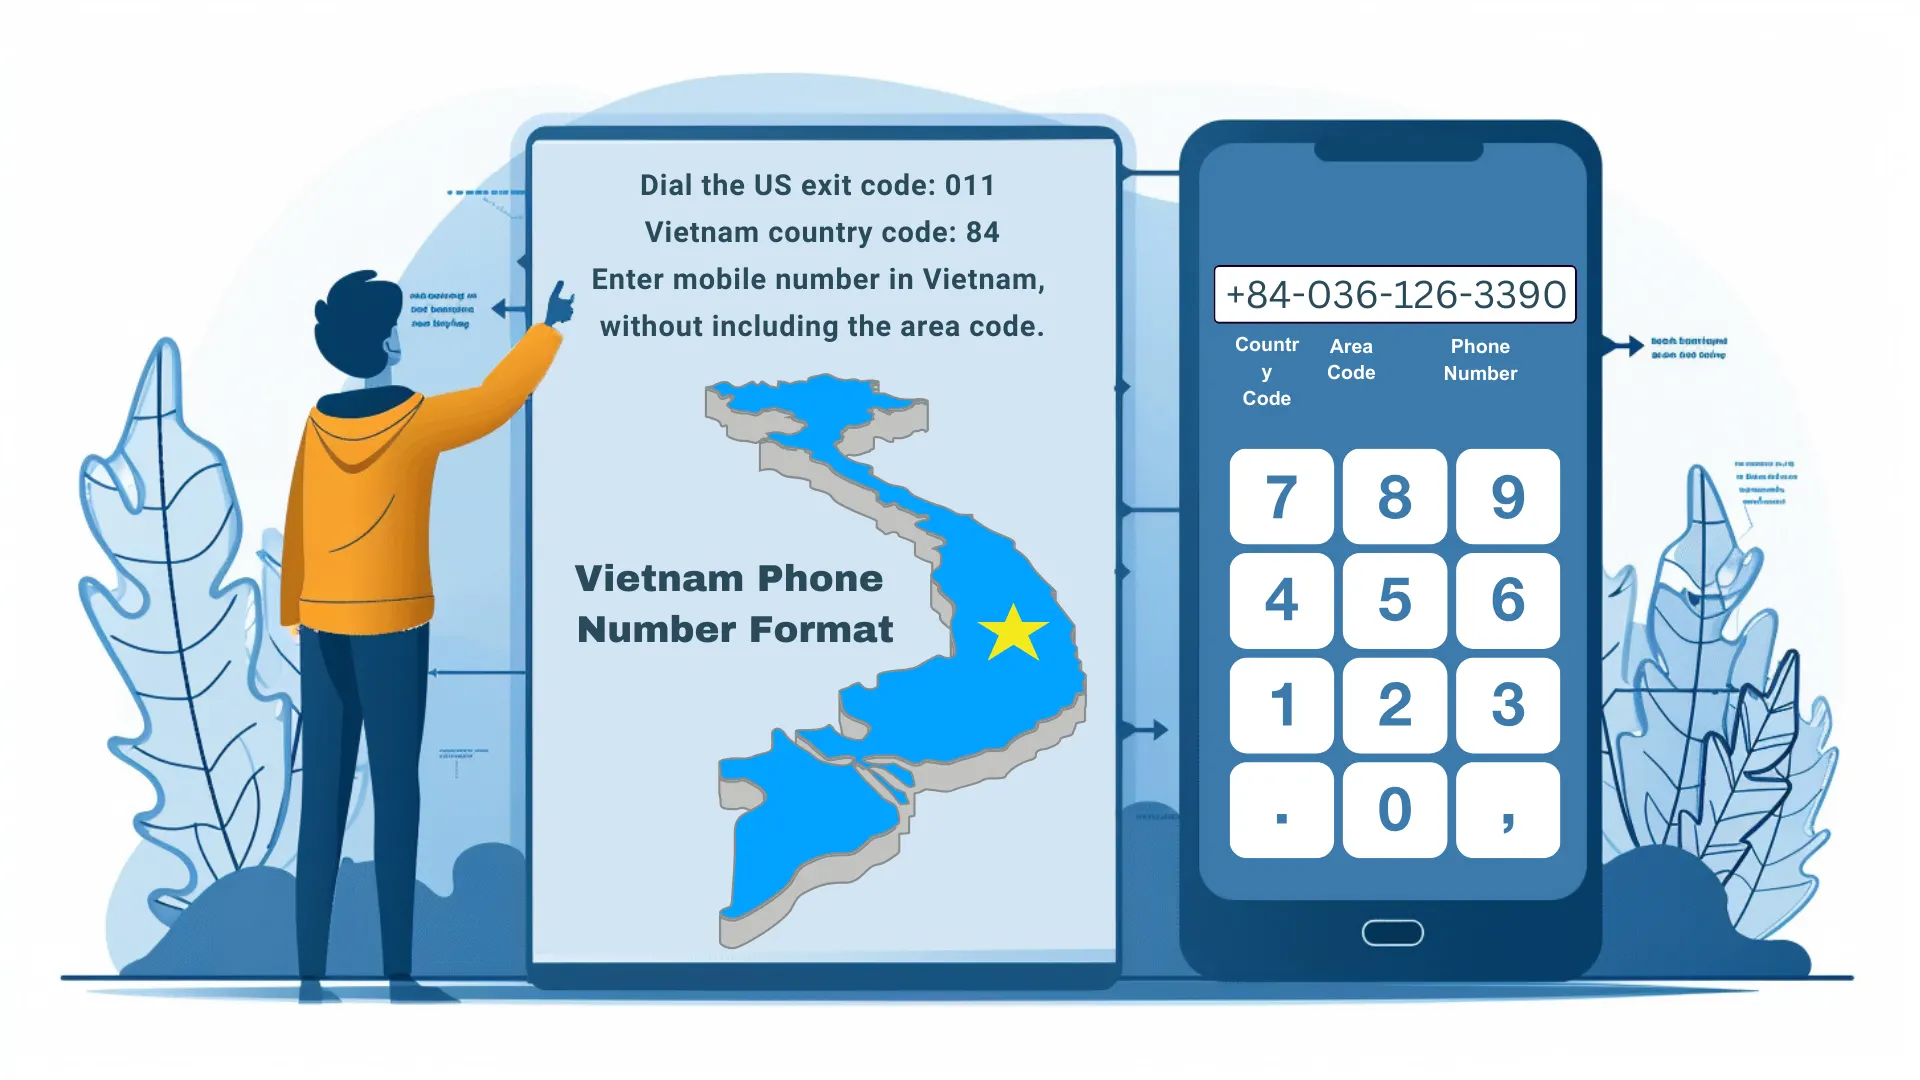 Steps for Calling Vietnam from the US (Landline):